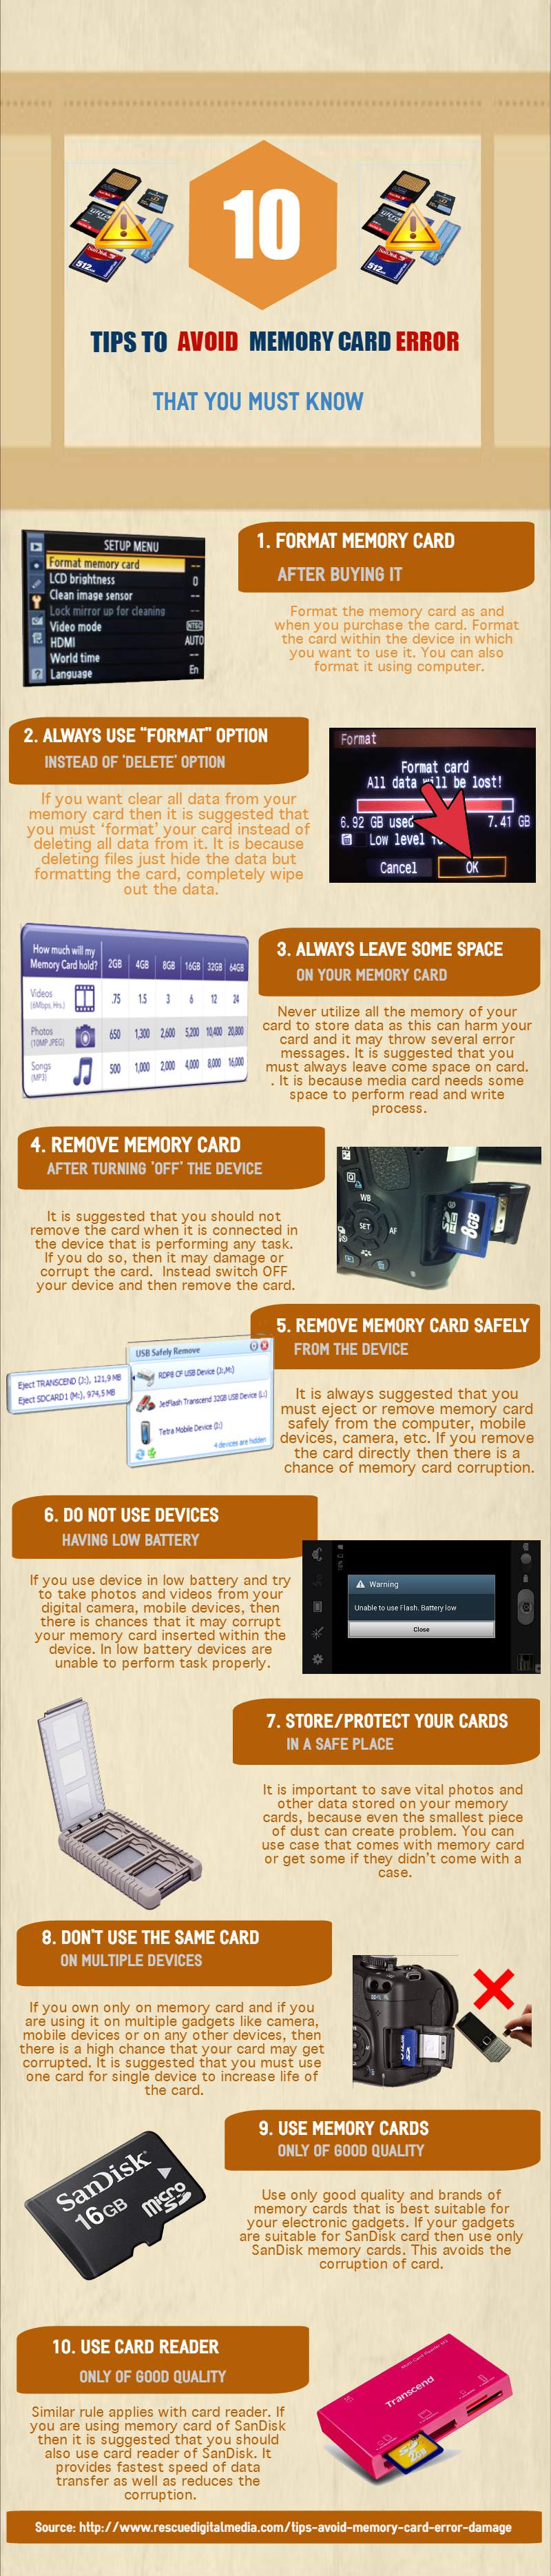 Prevent Memory Card Error